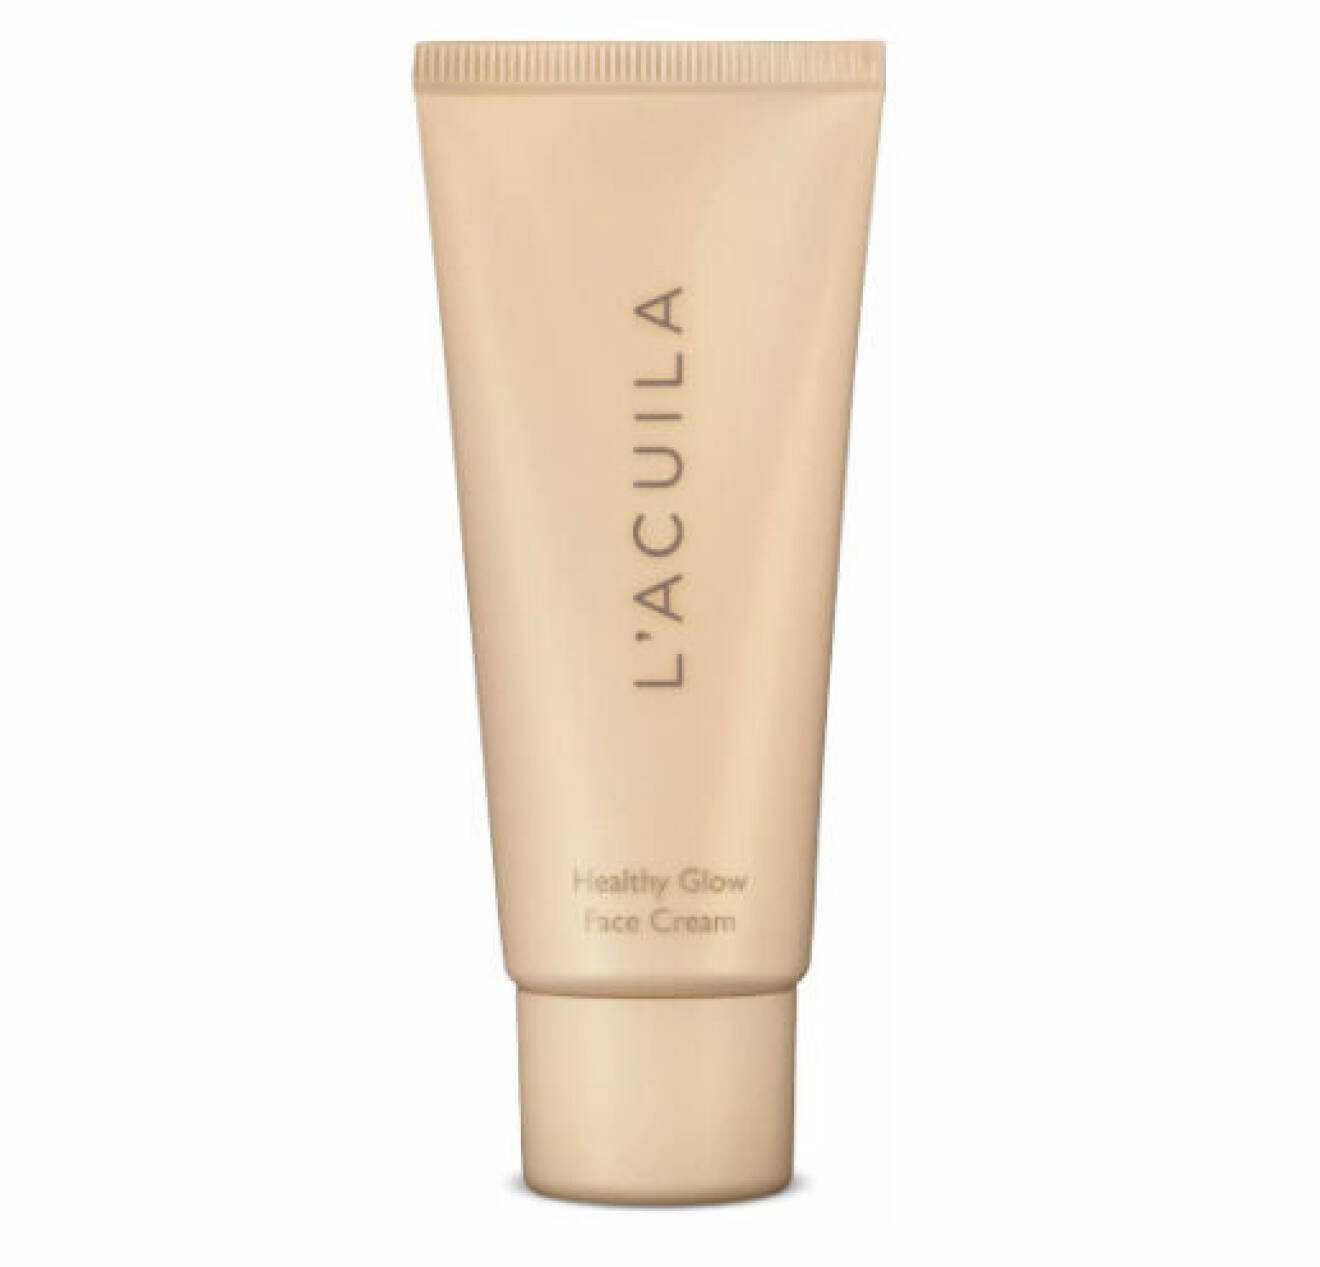 Healthy Glow Face Cream från L'Acuila